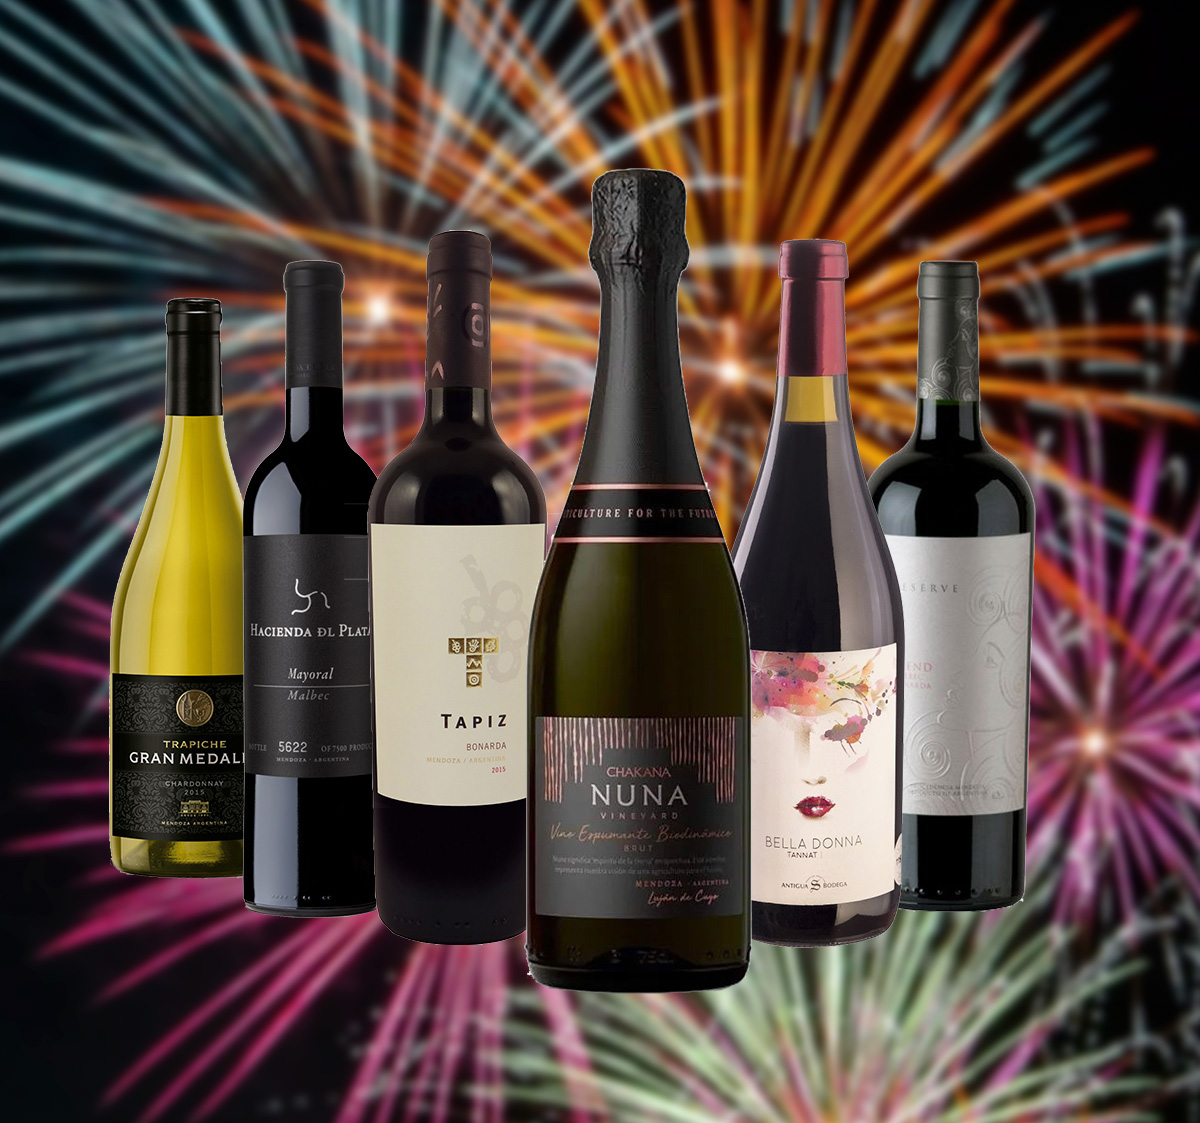 Wine tasting pack: Let's celebrate South America